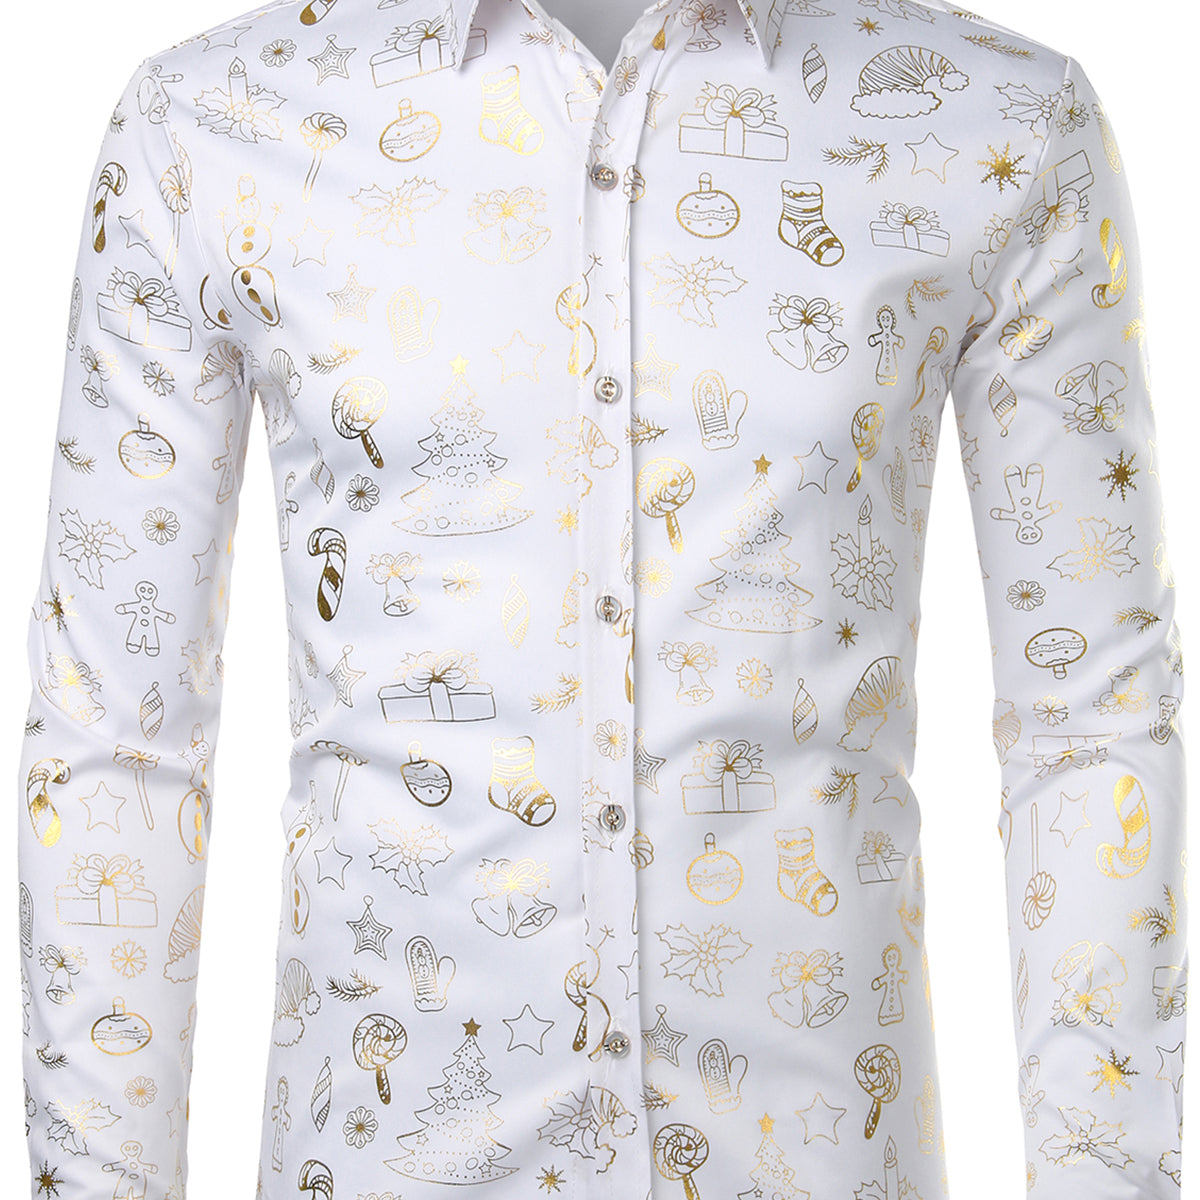 Elainilye Fashion Christmas Tops Round Neckline Graphic Prints Causal  Blouse Long Sleeve T-Shirt Sweart Shirt Tops 